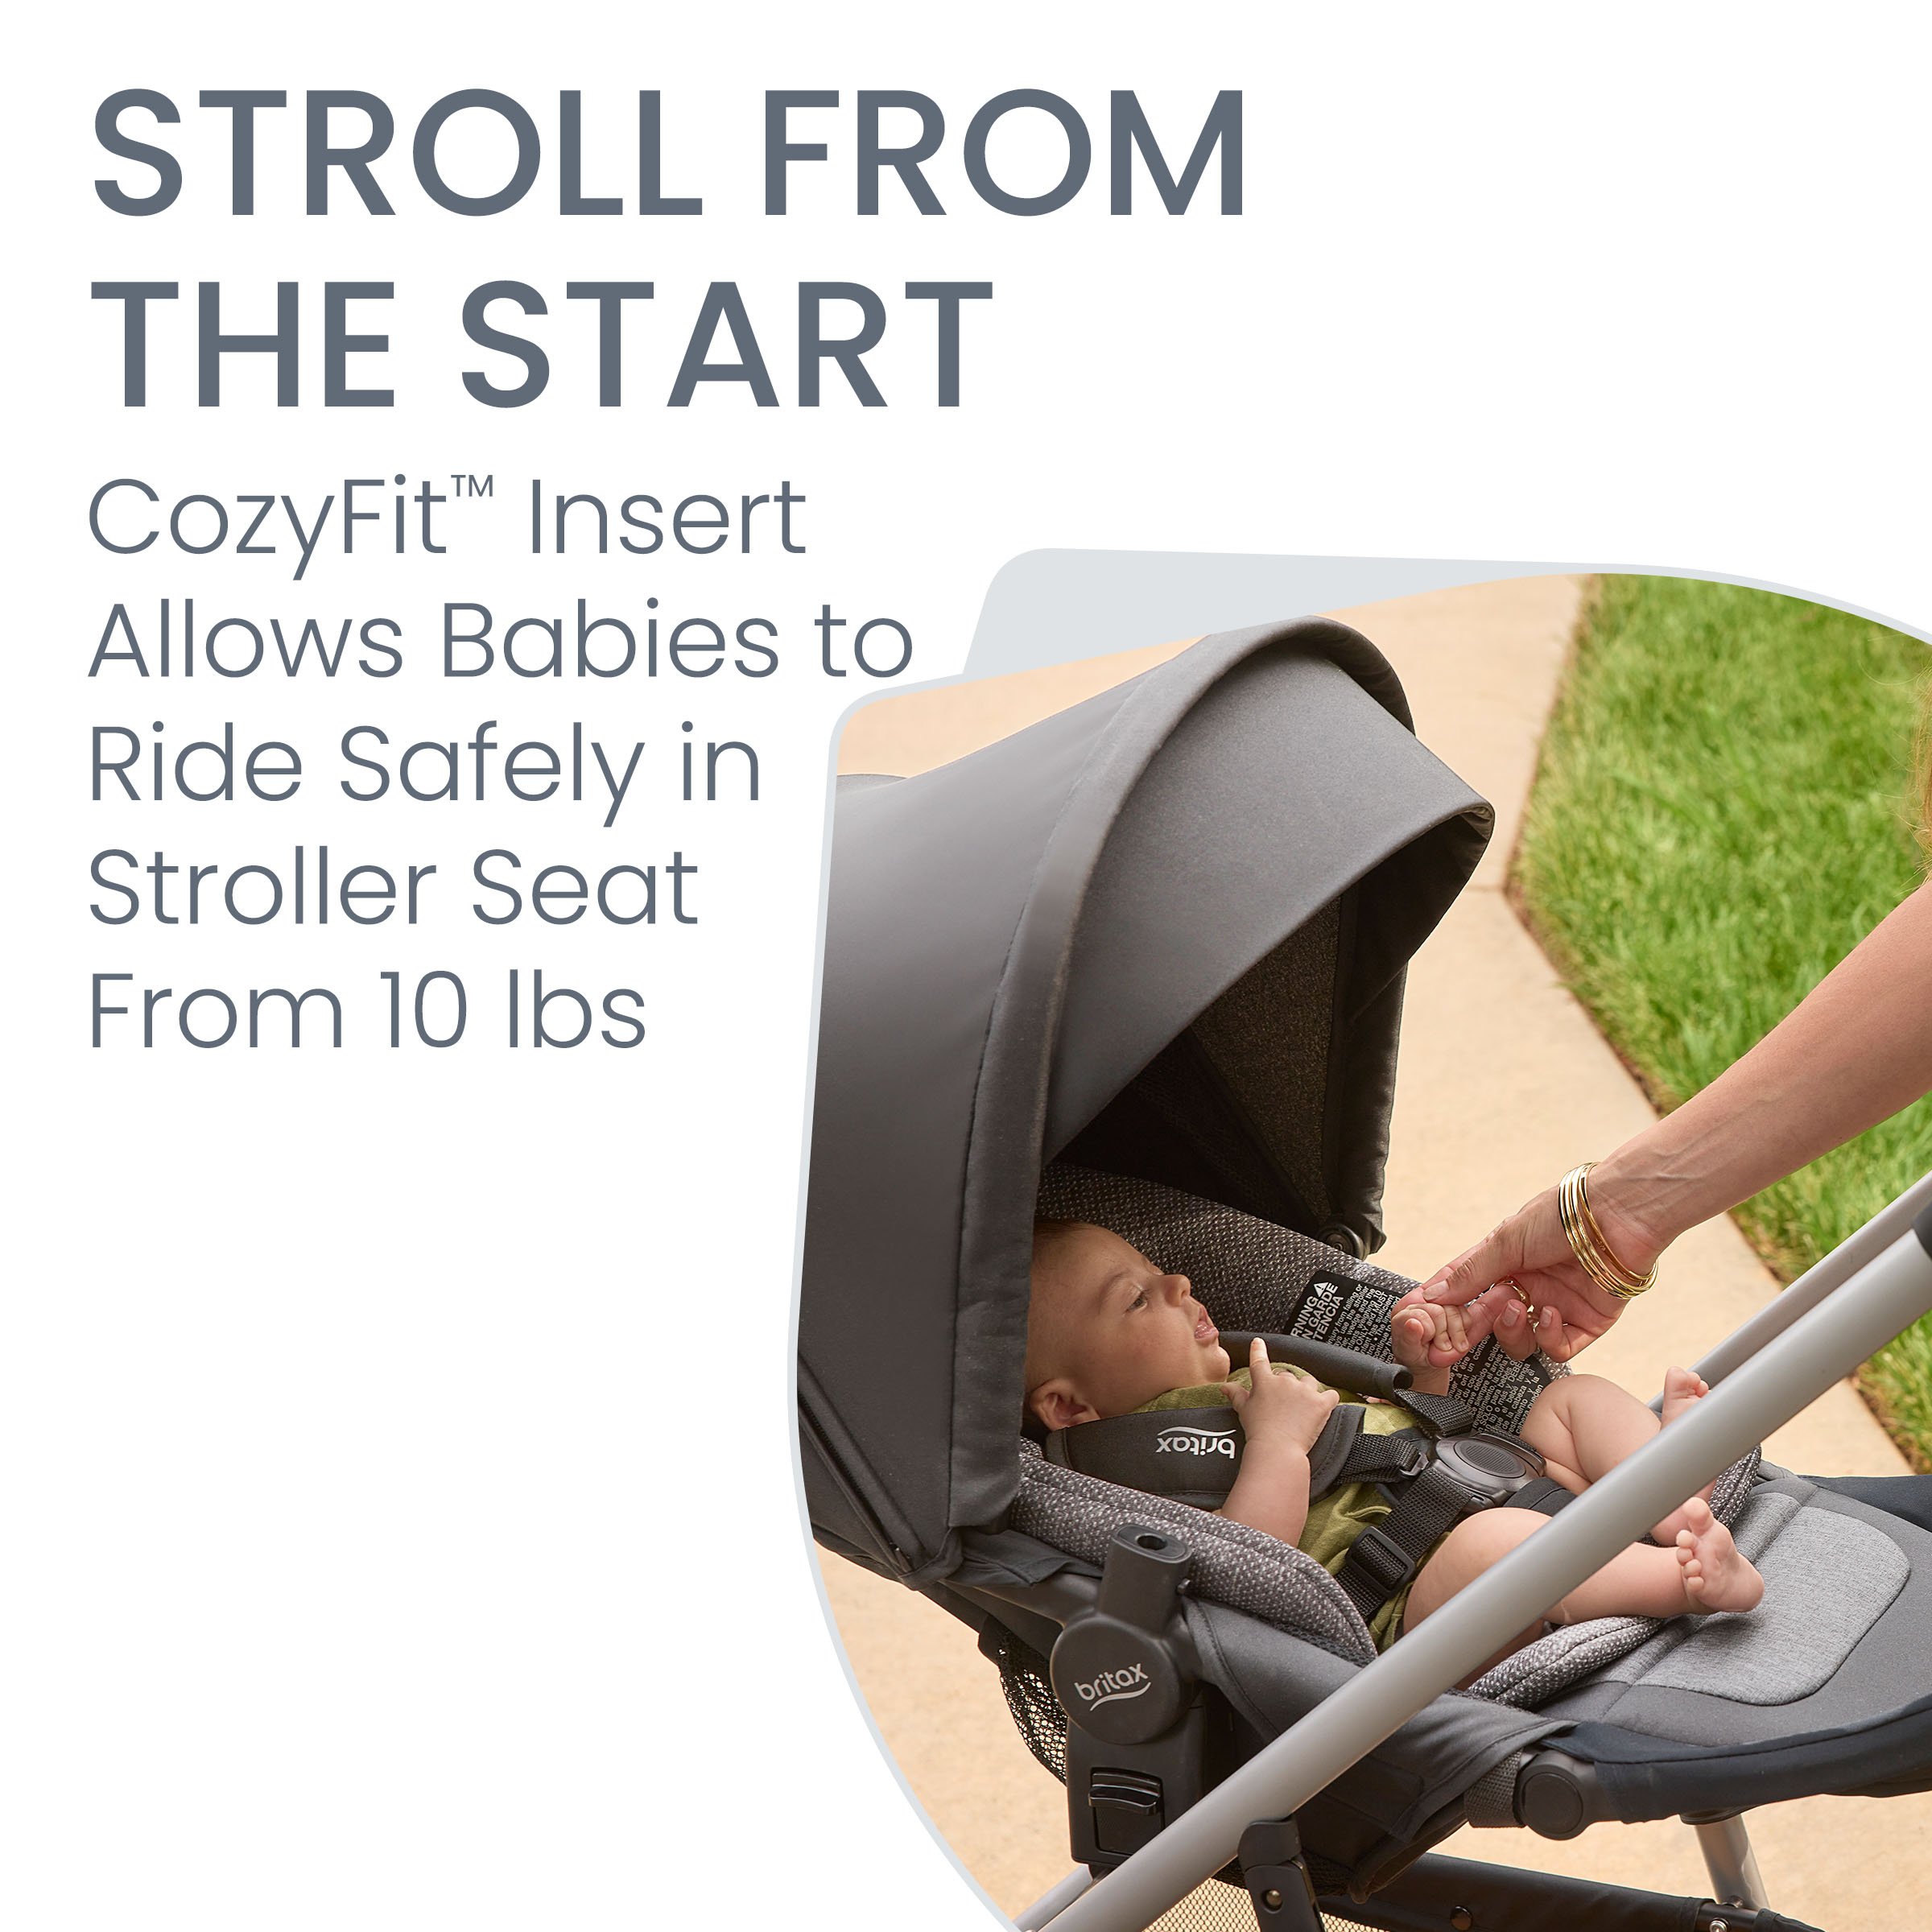 10 lb baby in Pindot Stone Grove stroller using cozyFit Insert